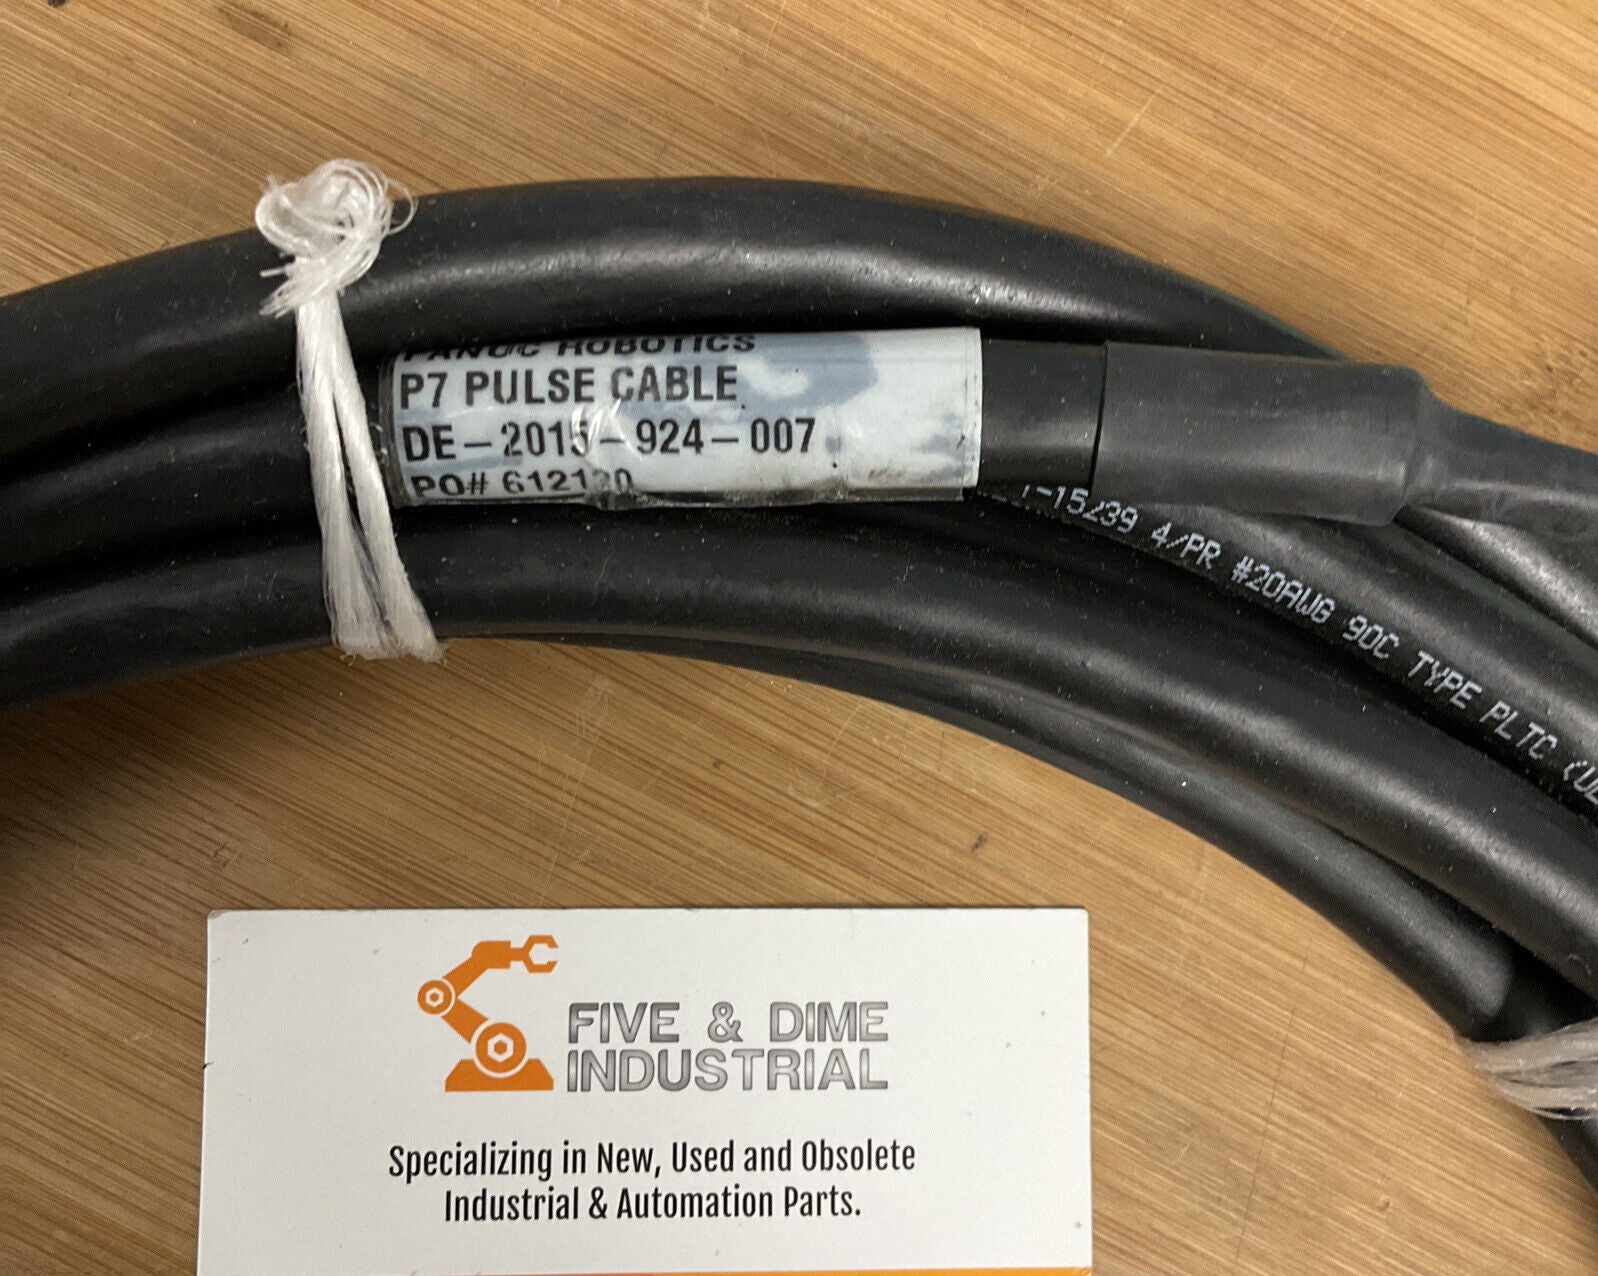 Fanuc DE-2015-924-007 P7 Pulse Cable Rev. C  7 Meters (CBL103) - 0